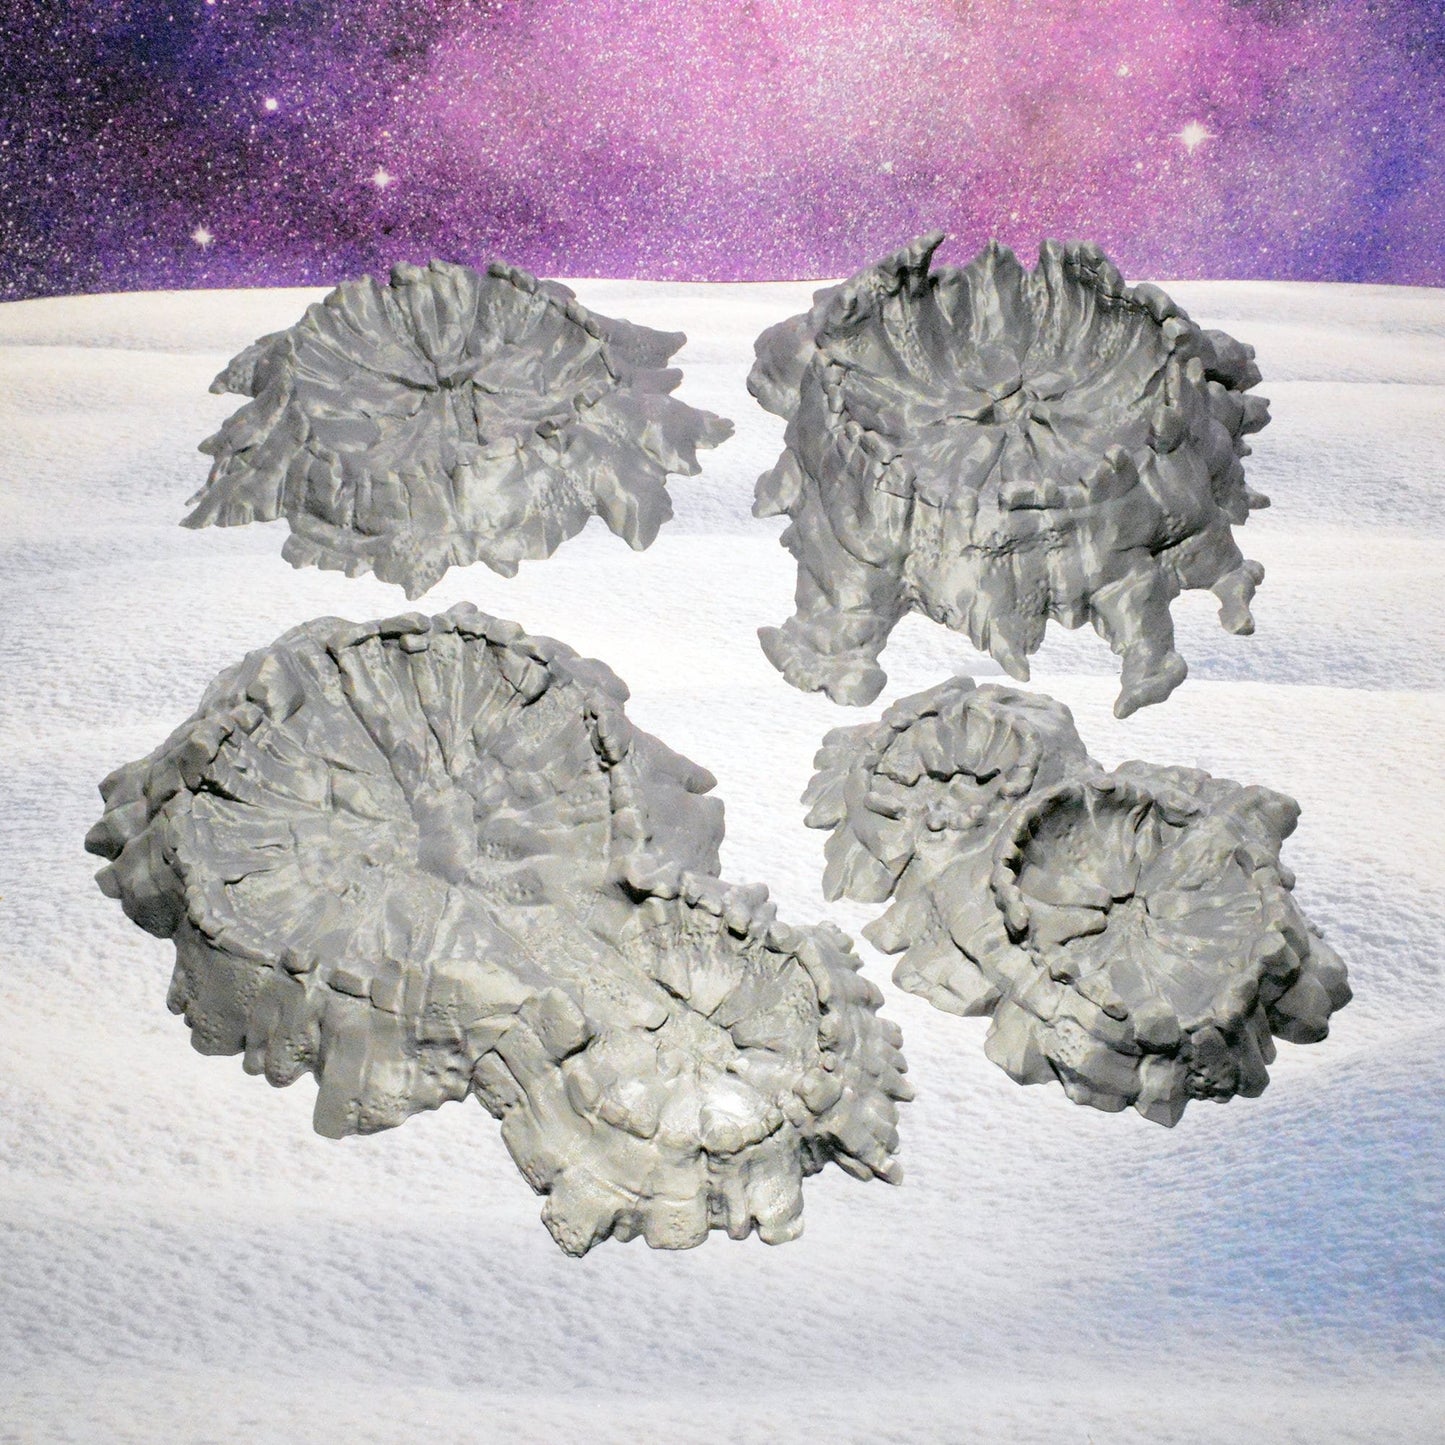 Miniature Lunar Craters 15mm 20mm 28mm 32mm for Warhammer 40k, Star Wars Legion, D&D DnD Pathfinder, Sci-Fi Moon Base